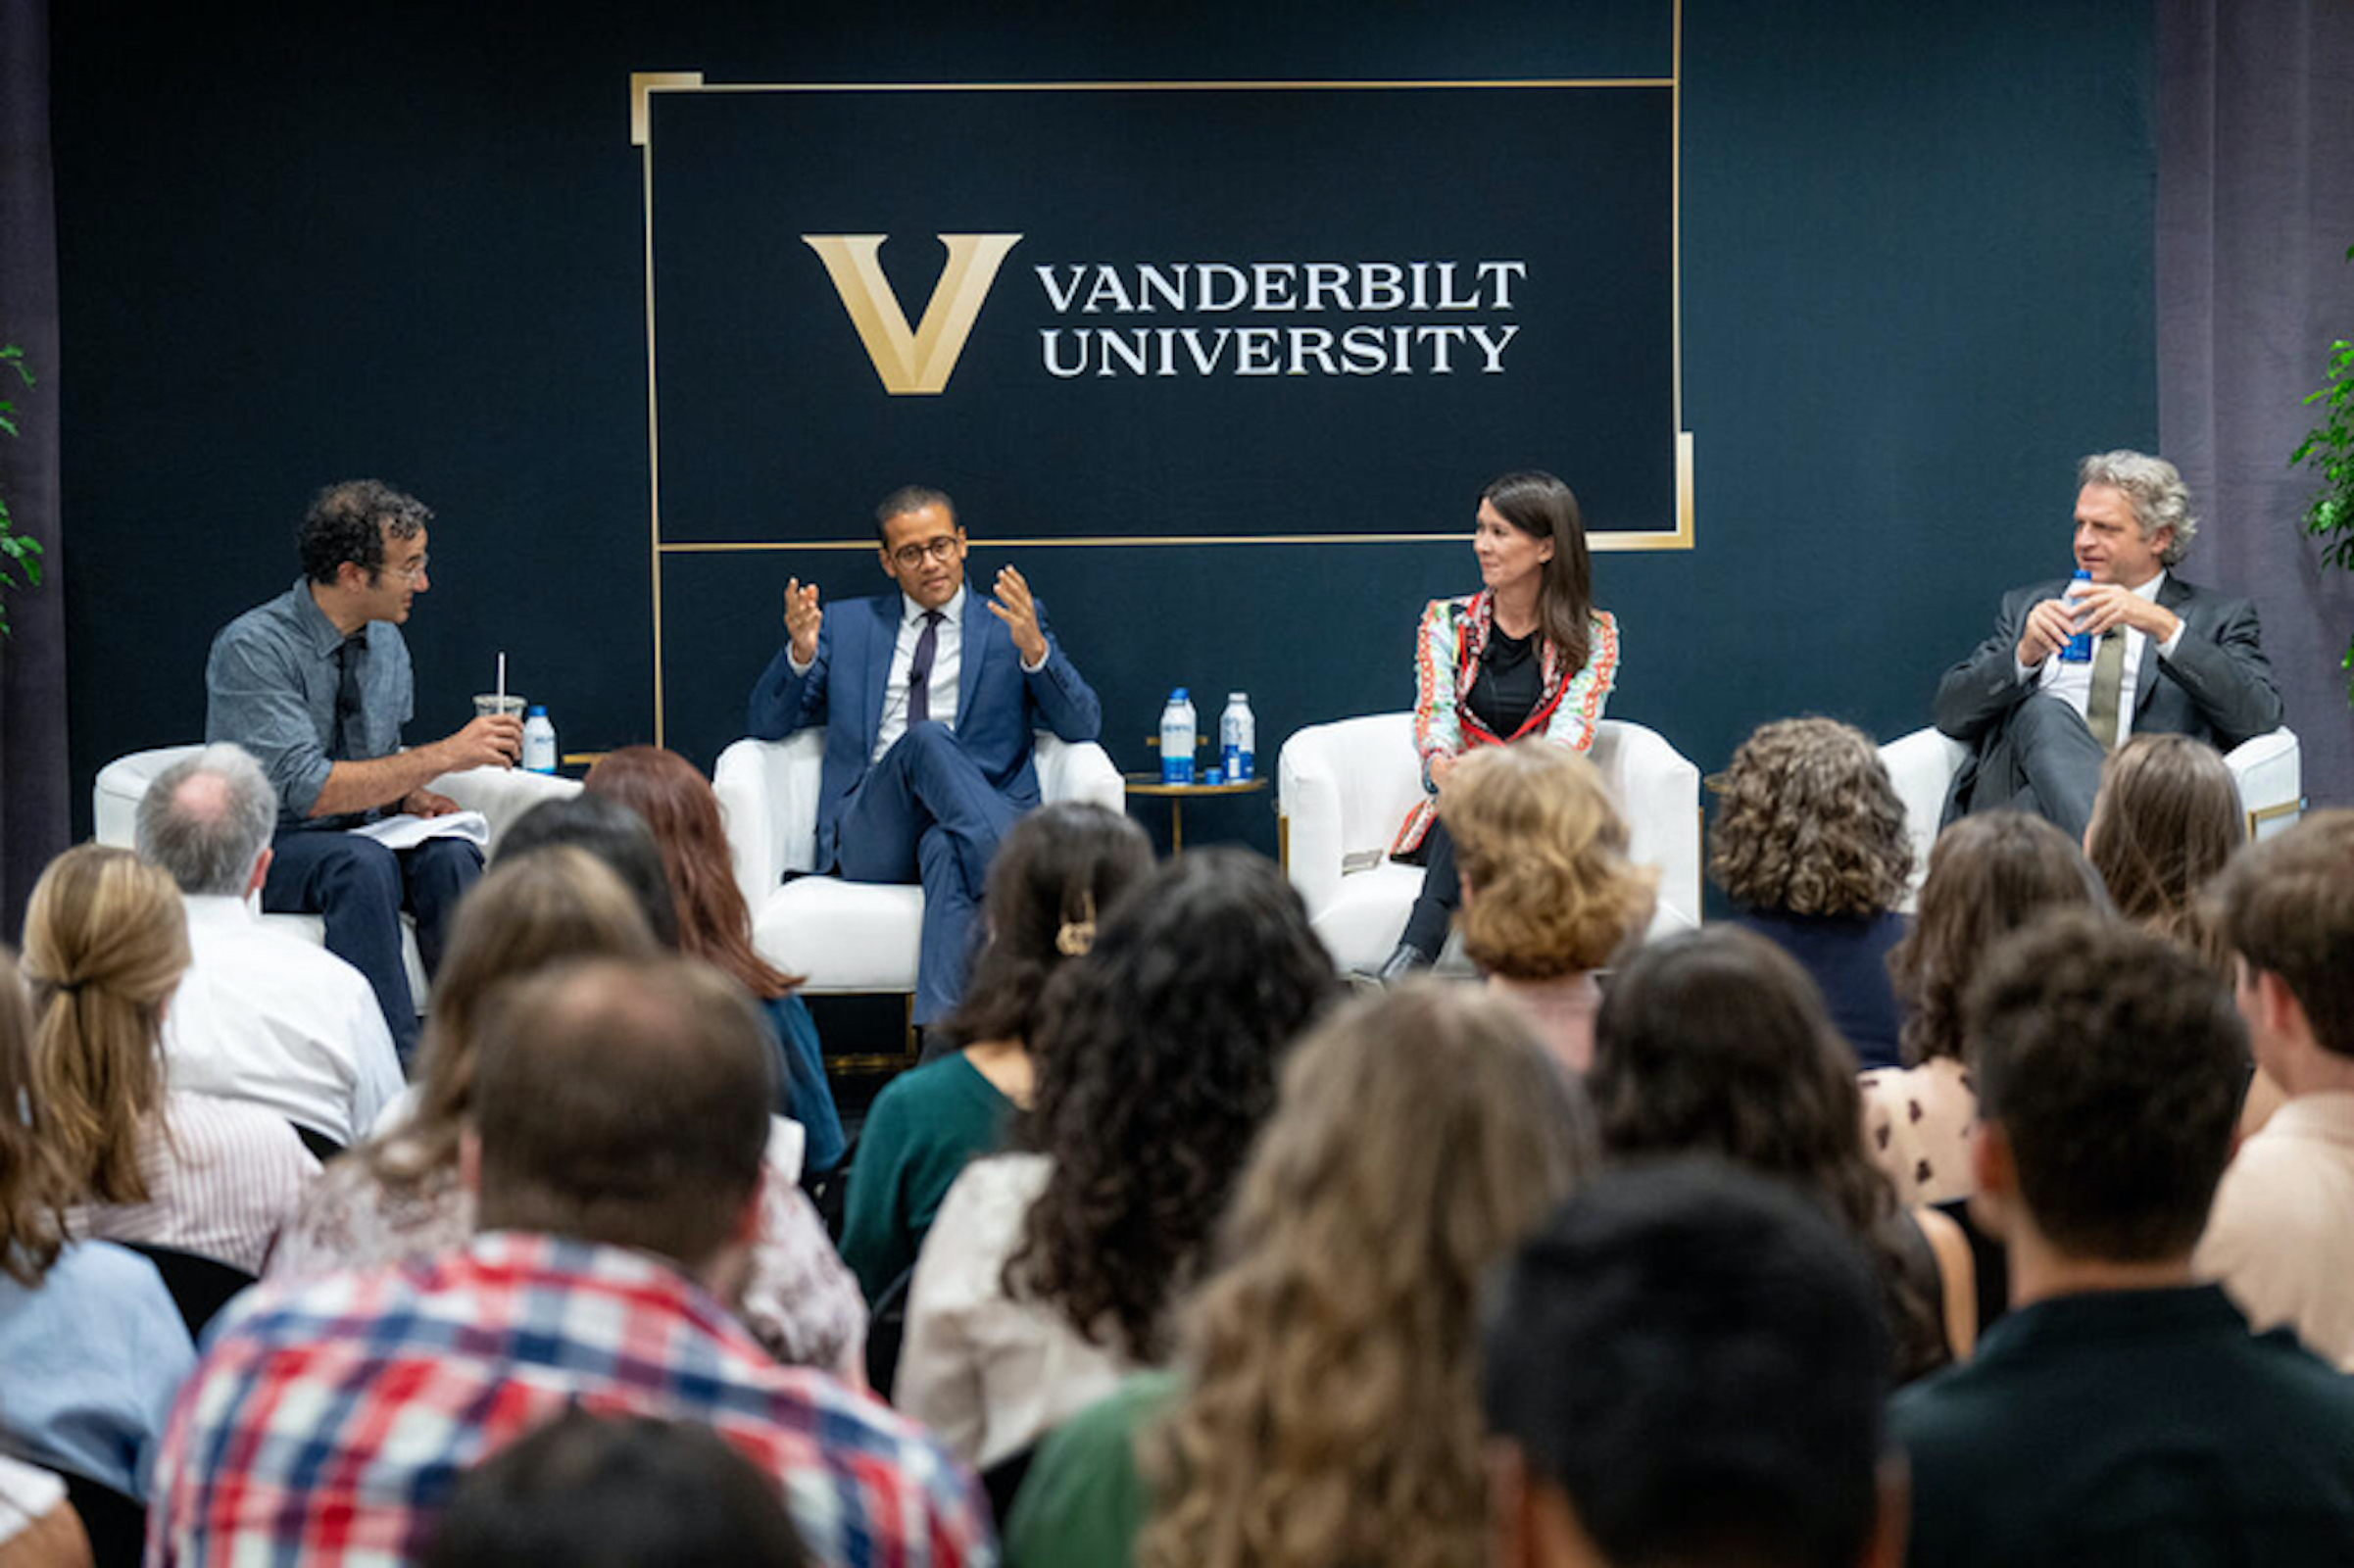 WATCH: A candid conversation on free expression at Vanderbilt